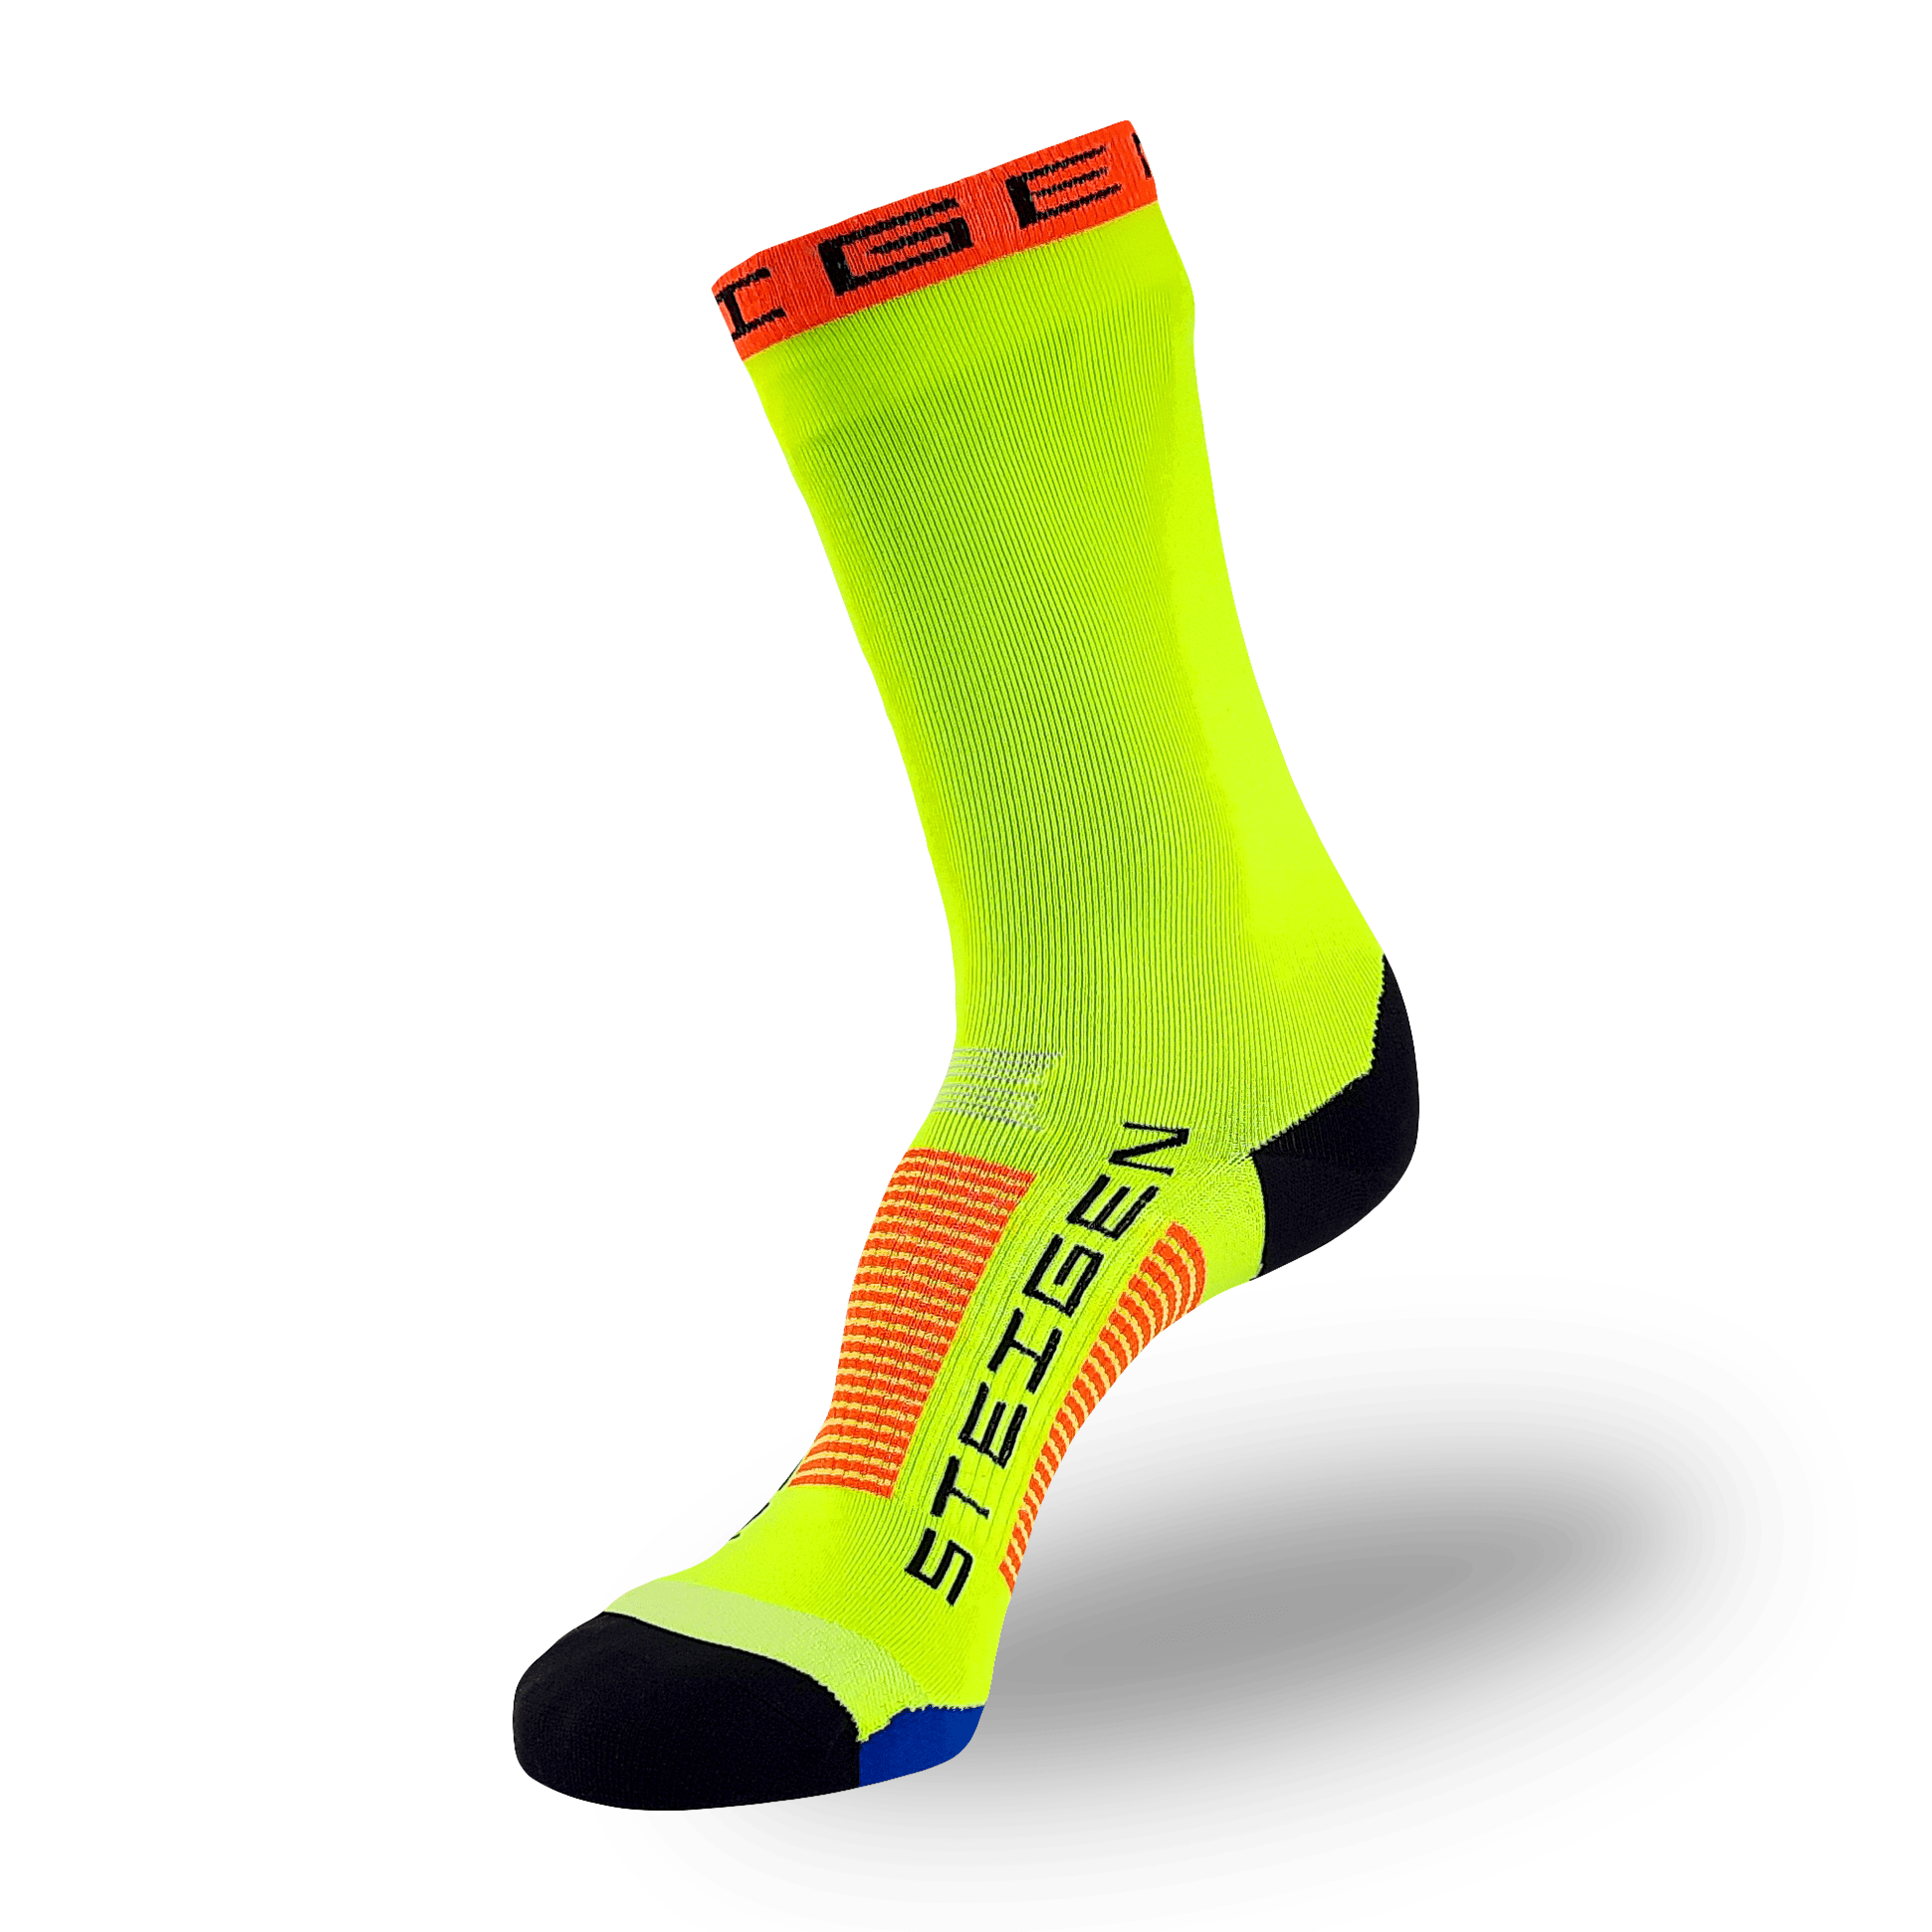 Fluro Yellow Running Socks ¾ Length